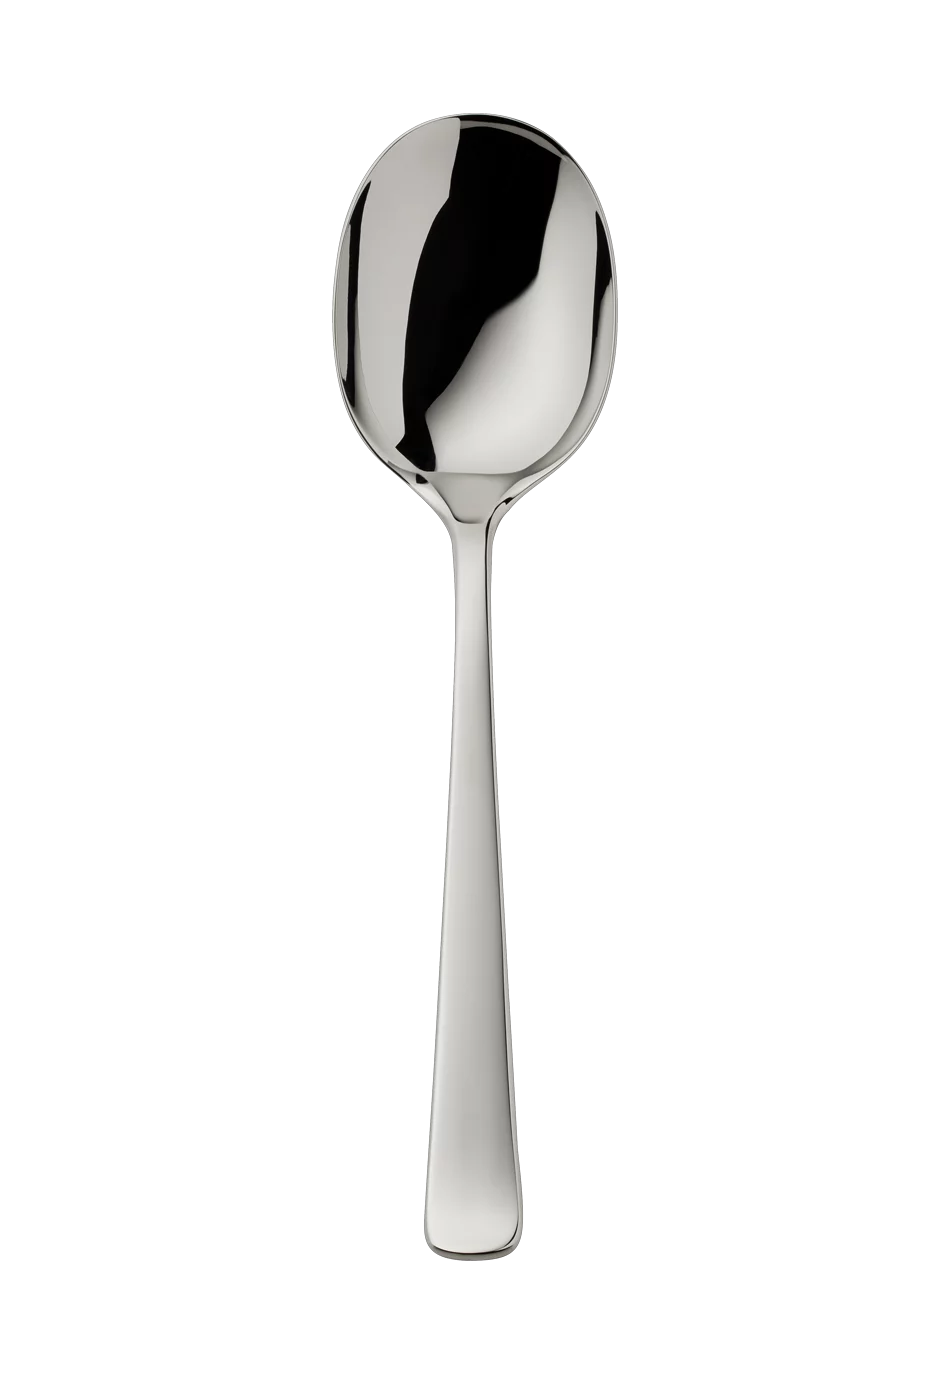 Atlantic Brillant Serving Spoon (18/8 stainless steel)